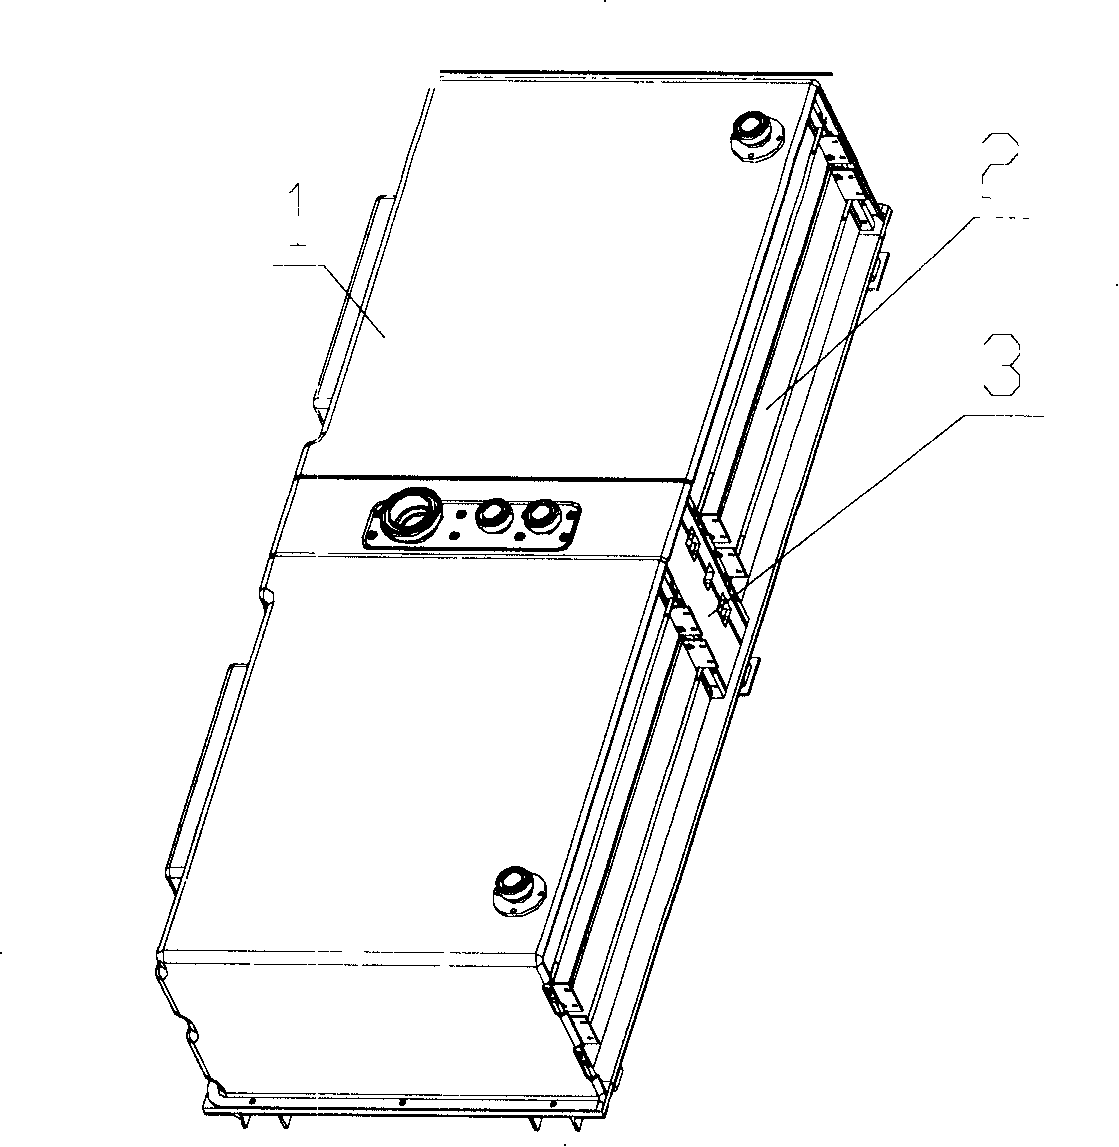 Modular design method for proton exchange film fuel battery